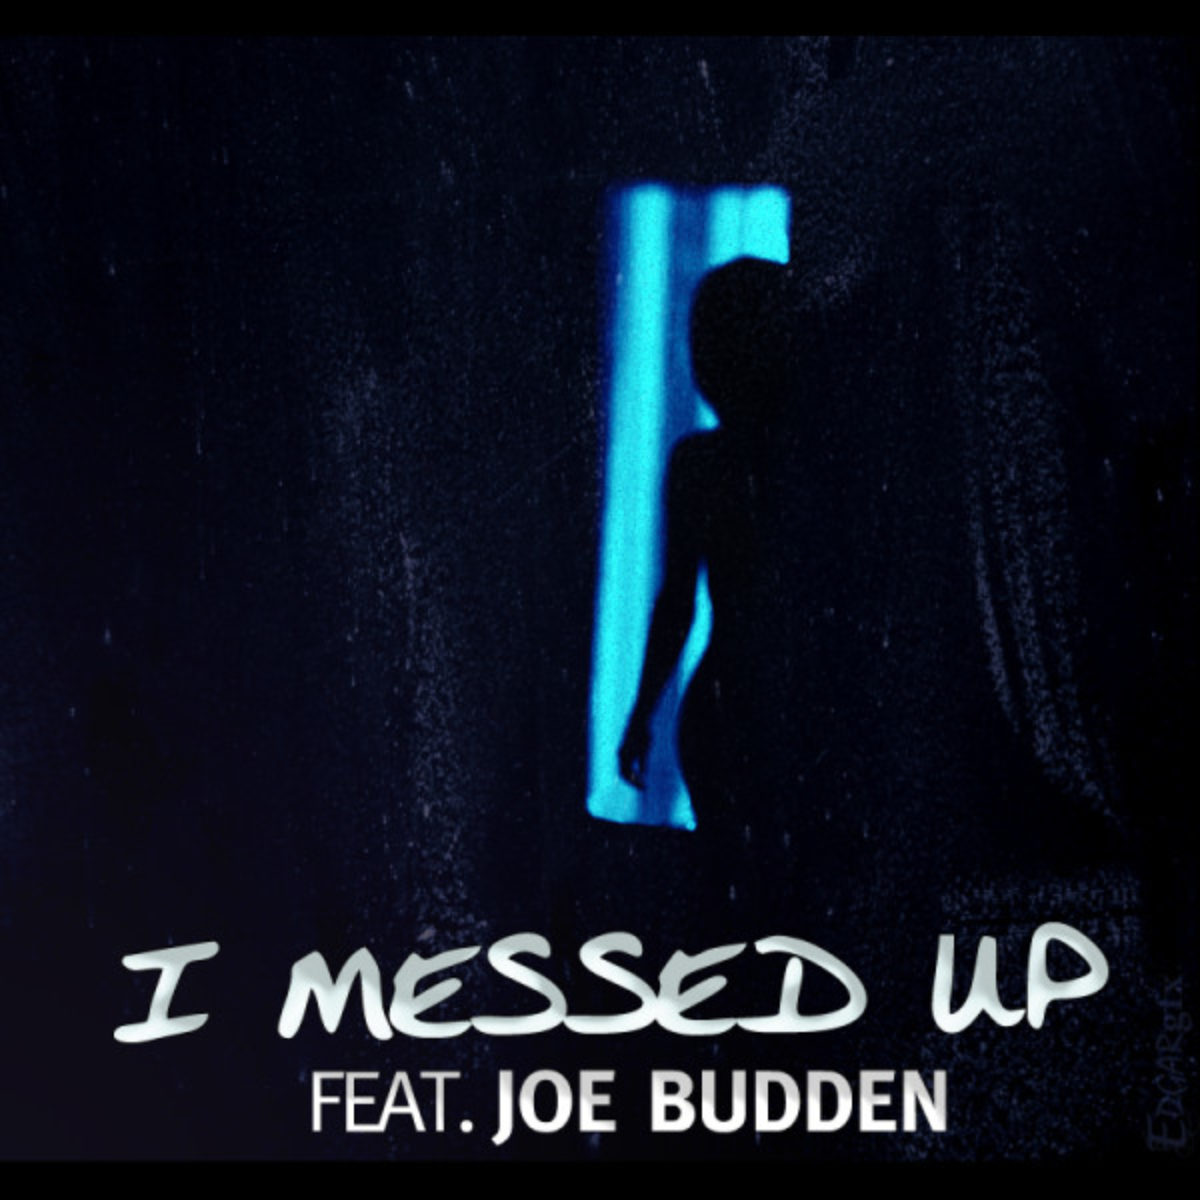 Joe feat. I messed up. Неправда mess feat. Написать приложение Joe / feat / Steve. Mess up перевод